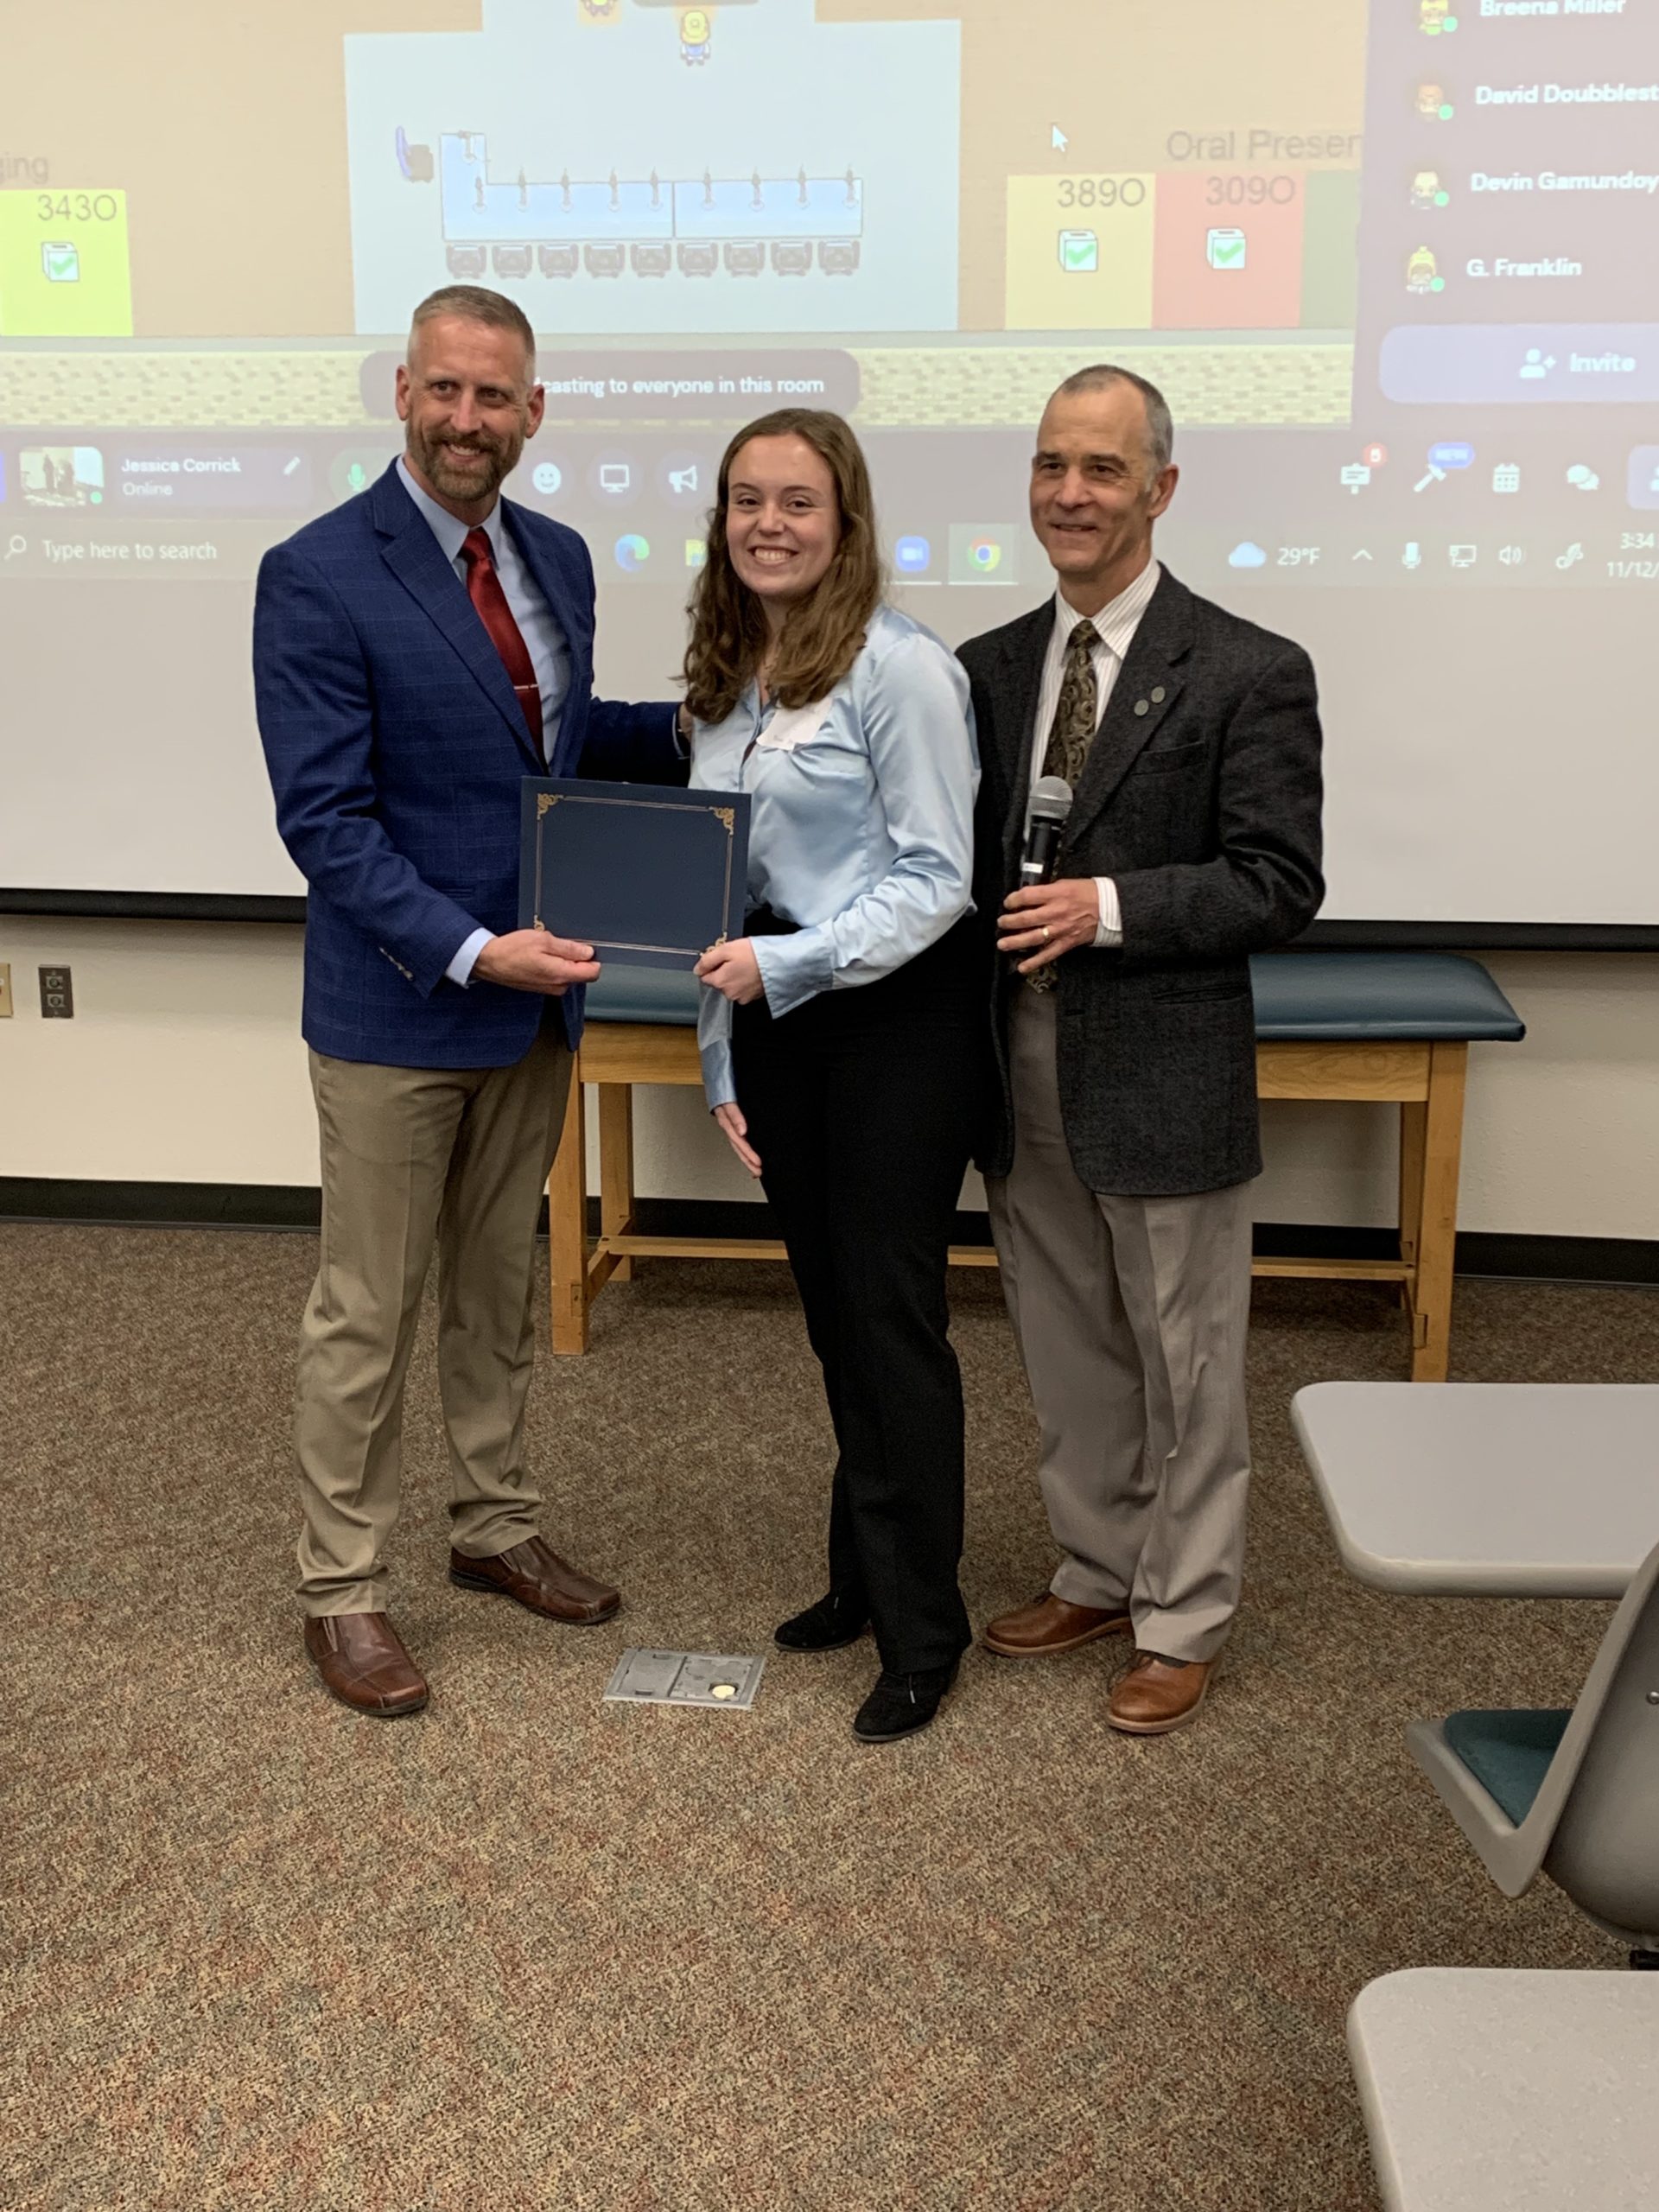 Sarah receiving her award for best undergraduate poster presentation